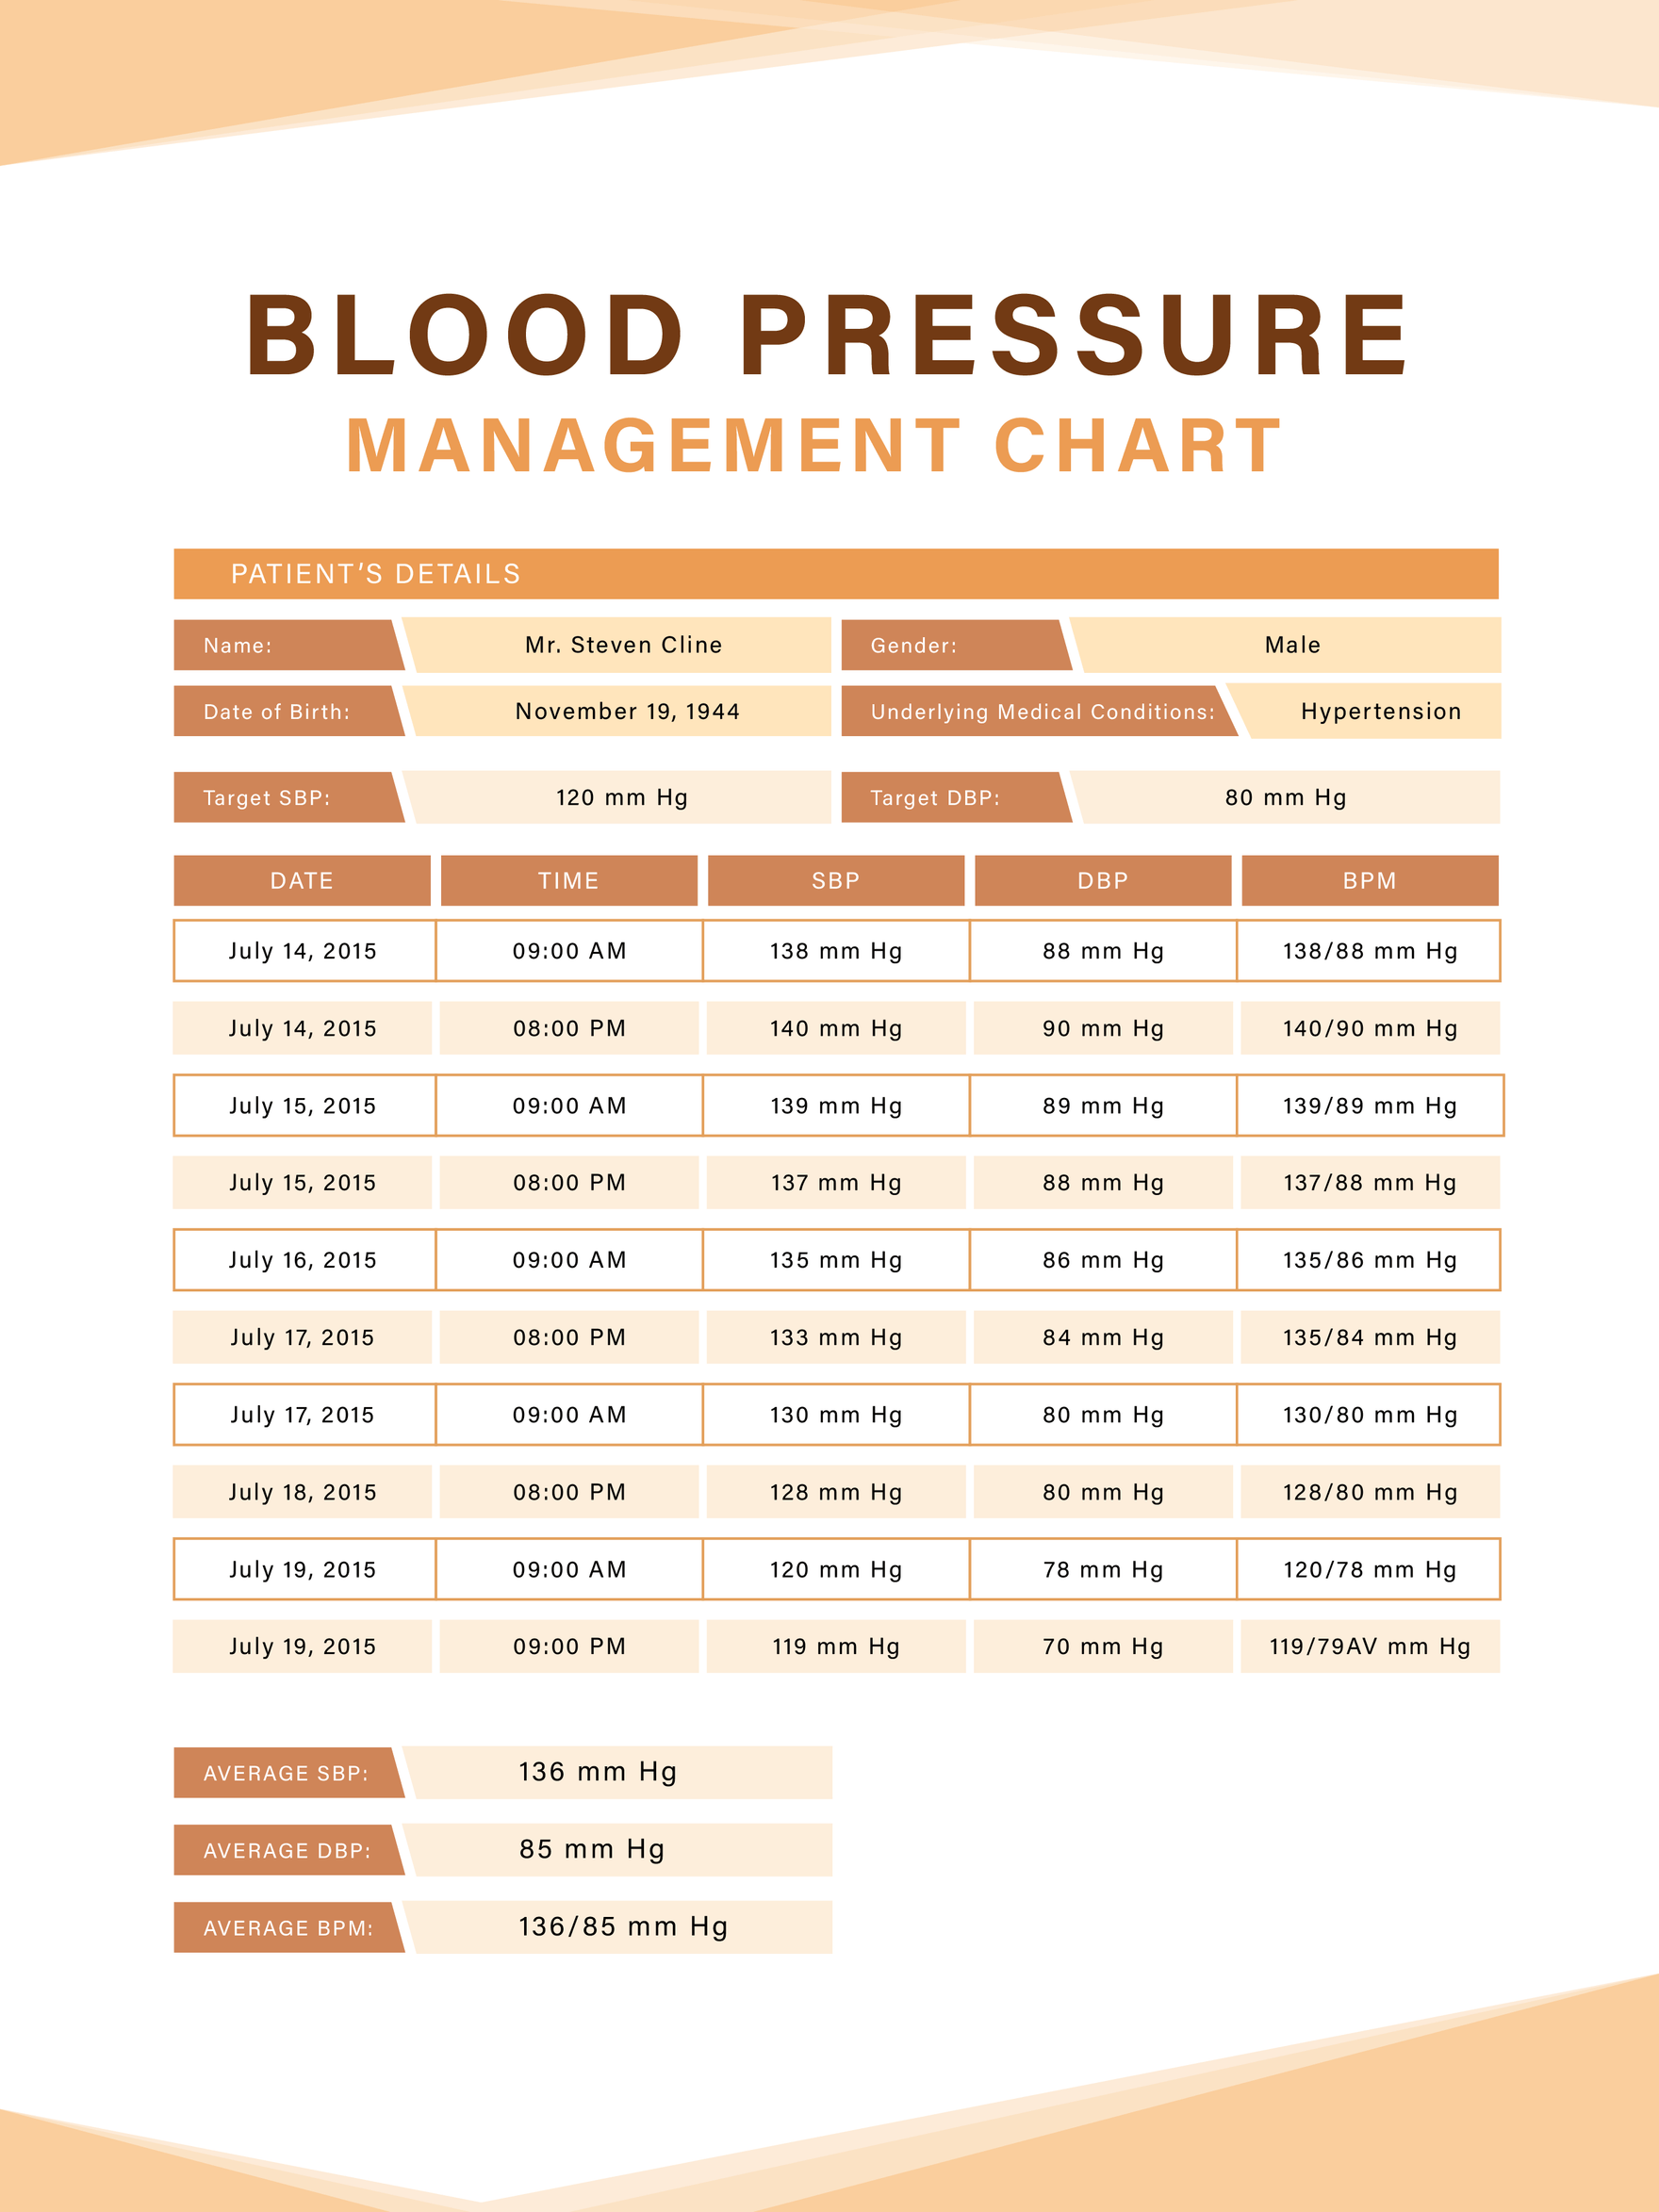 Blood Pressure Management Chart